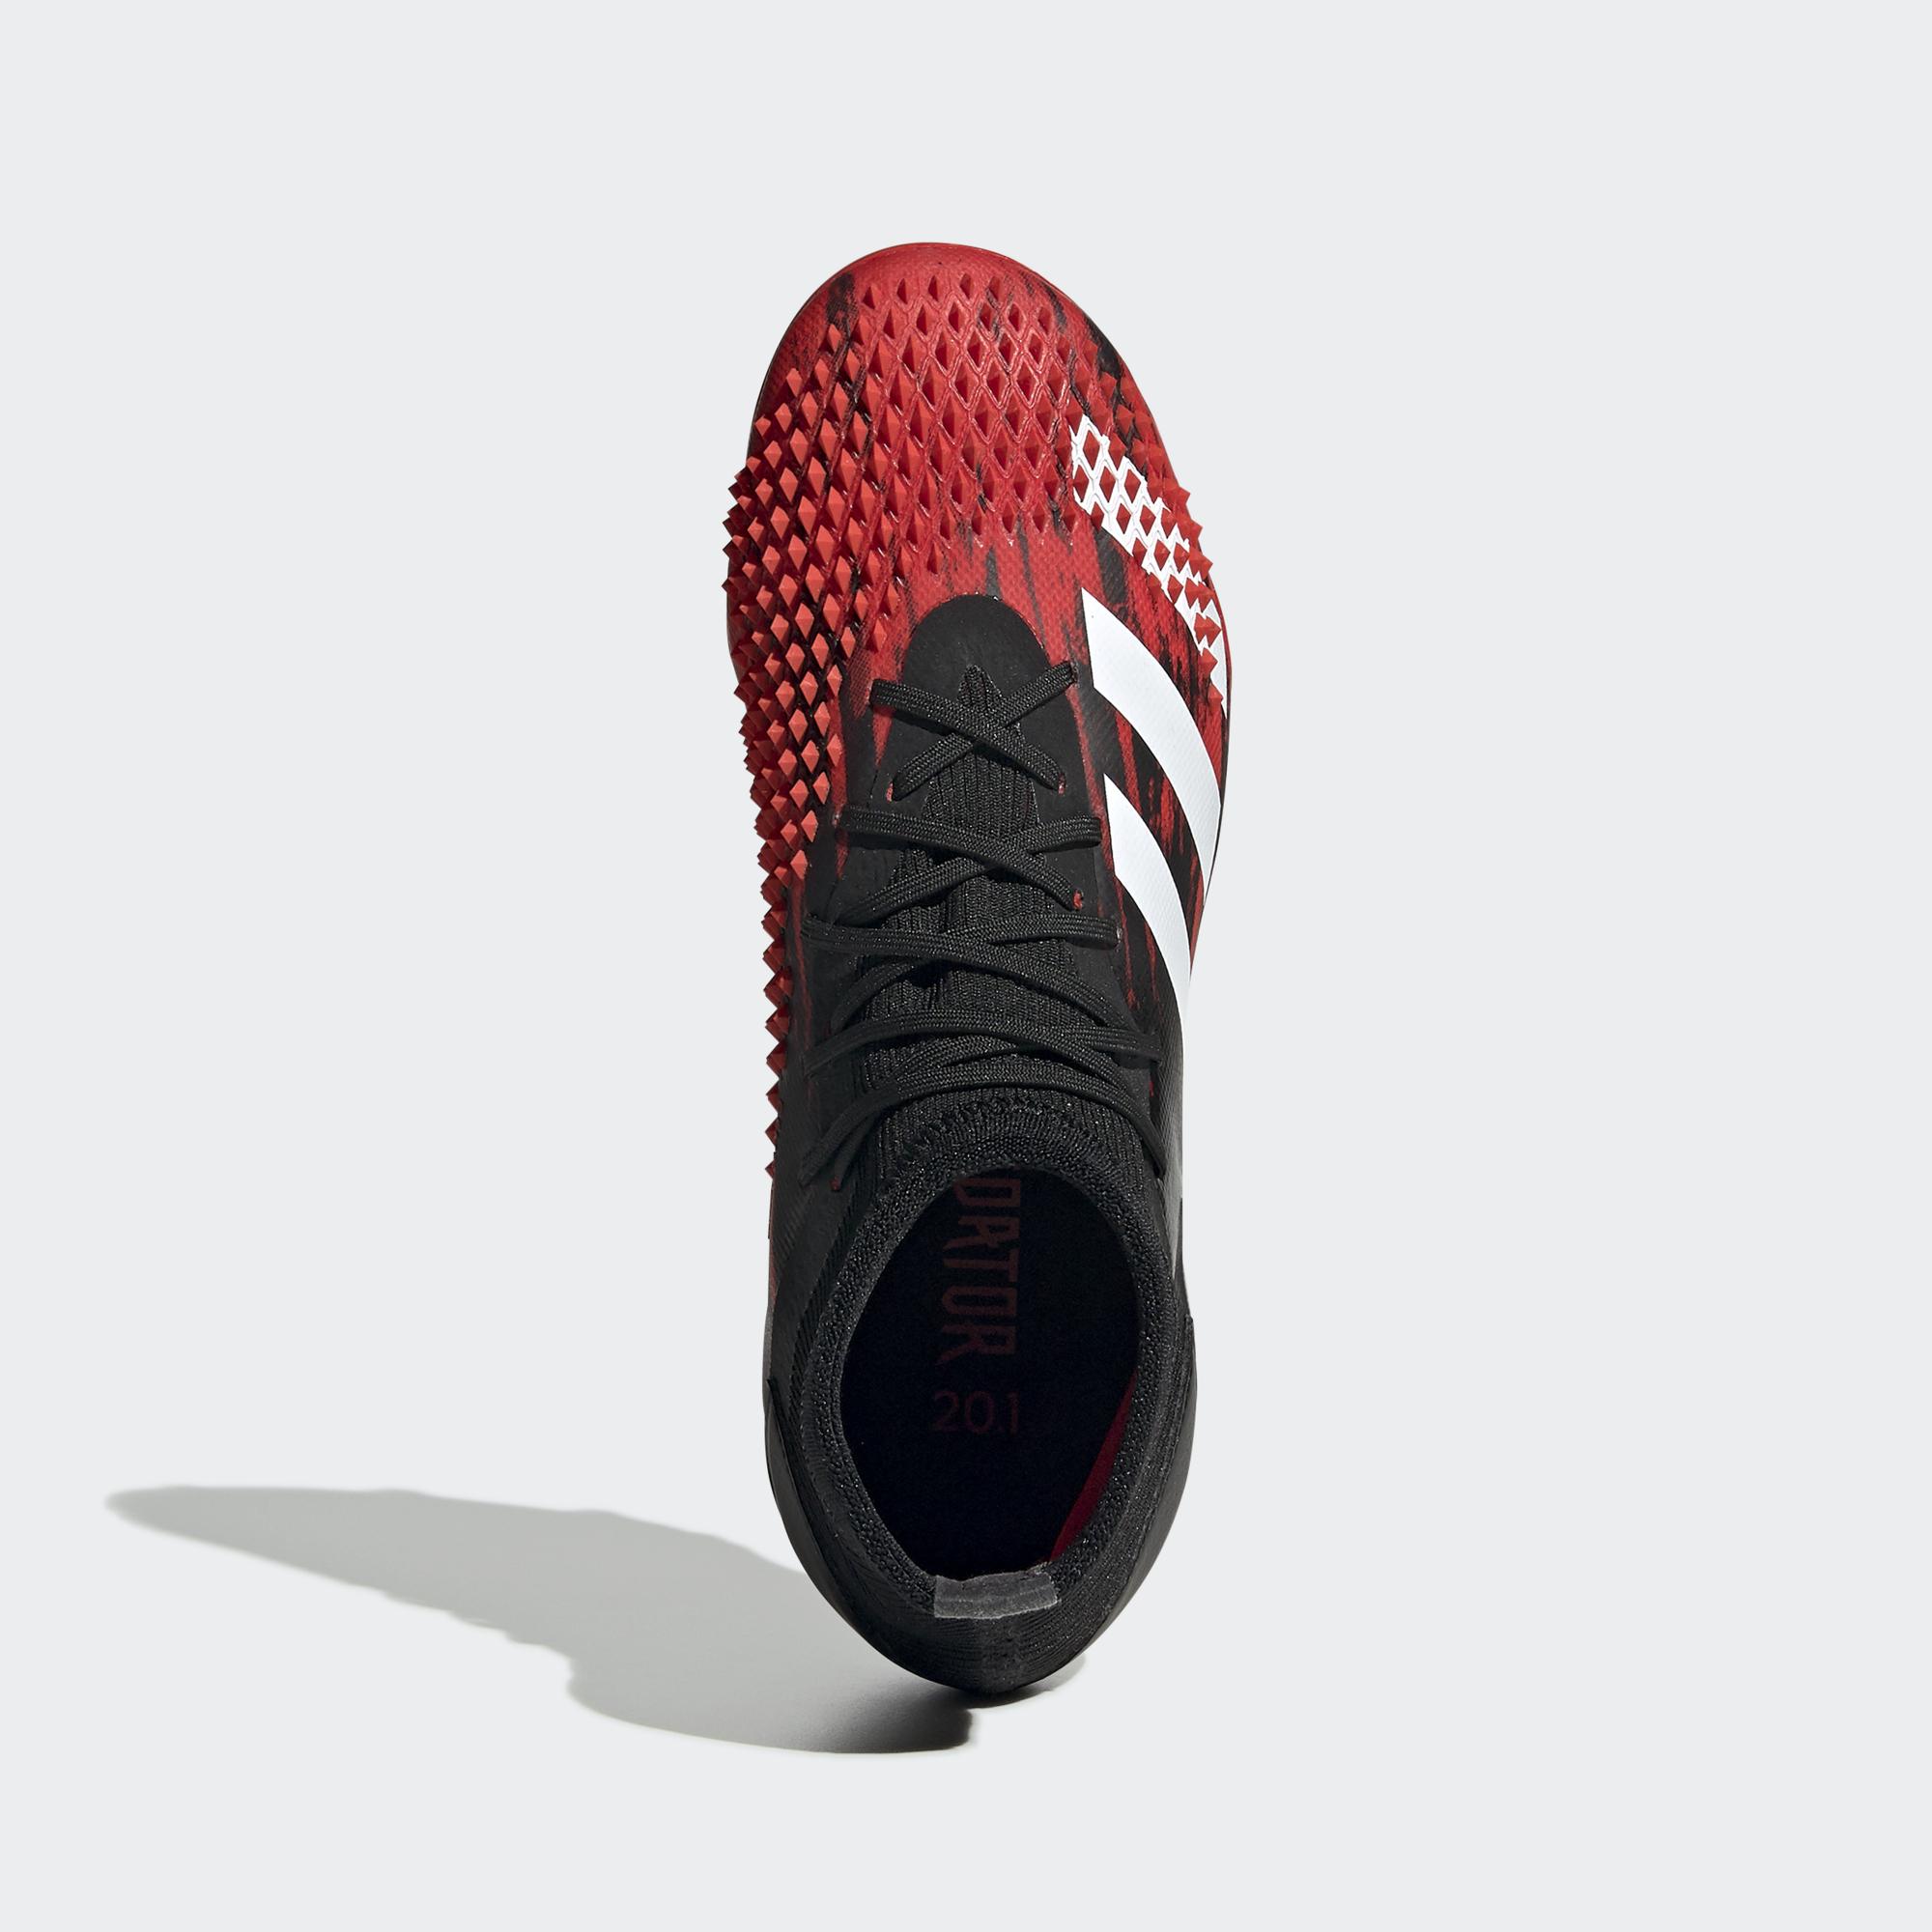 Black u0026 Red Adidas Predator 2019 'Archetic Pack' Boots Leaked